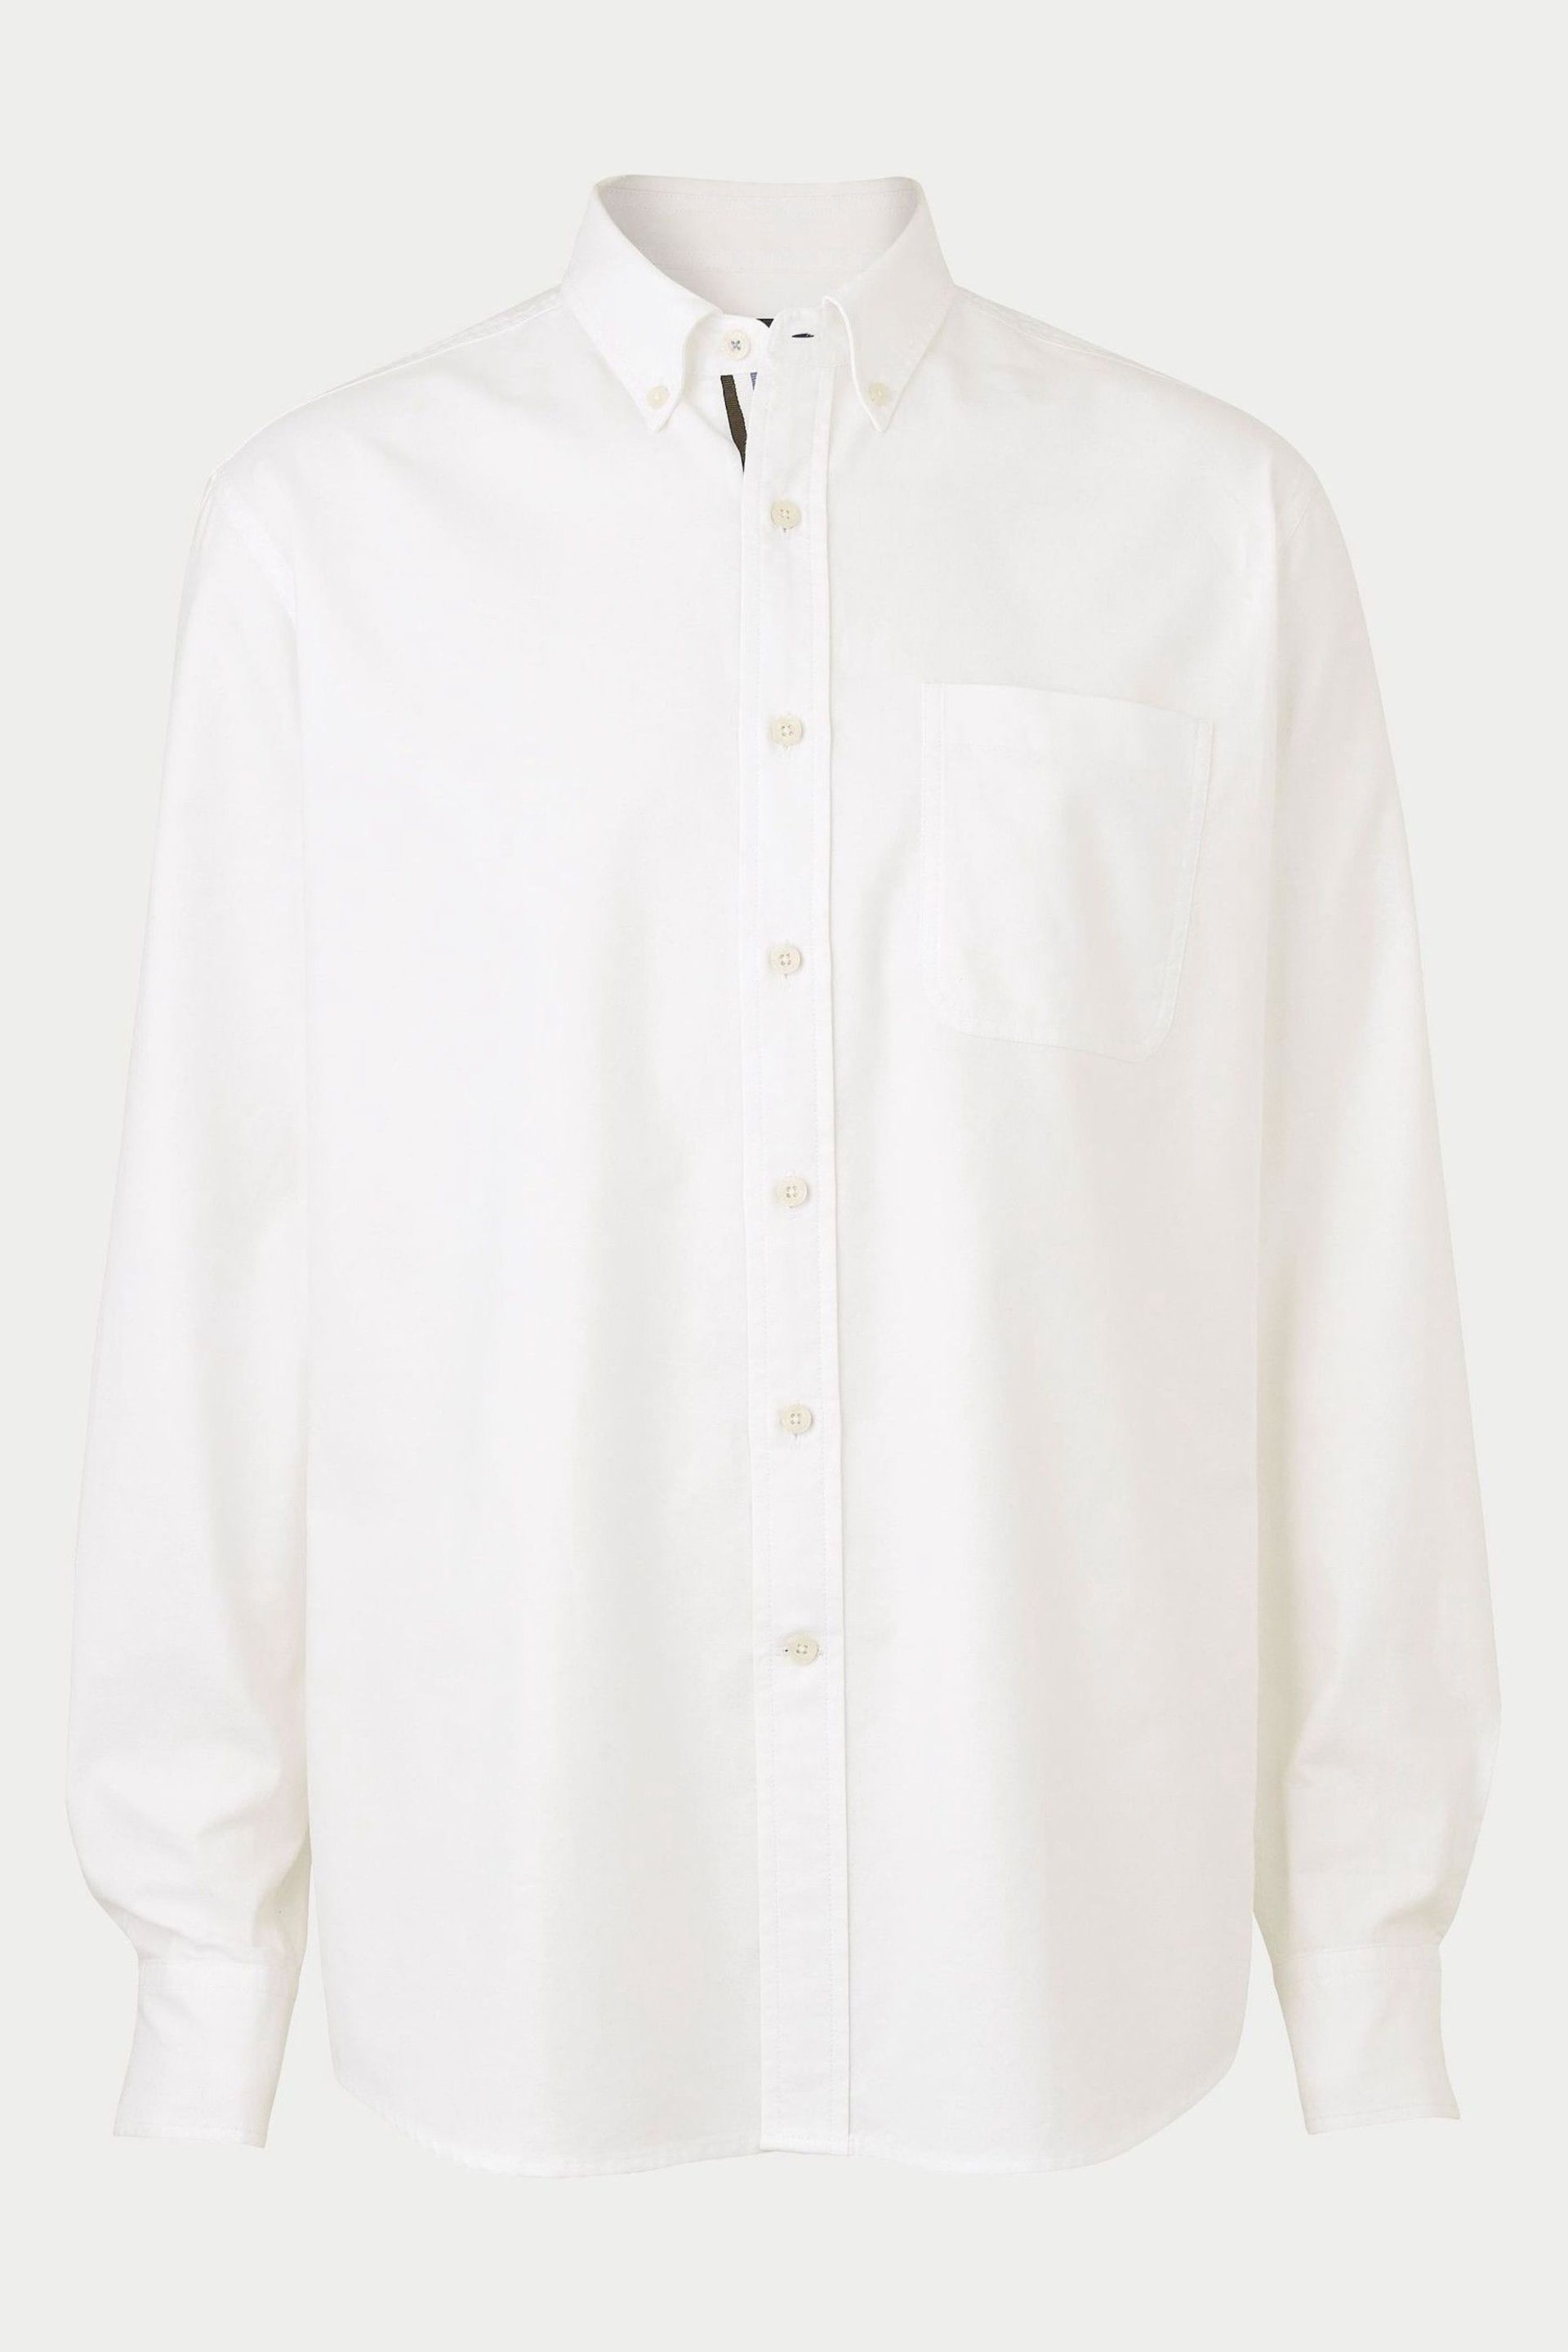 The Savile Row Company Stripe Placket Button Down Oxford White Shirt - Image 3 of 5